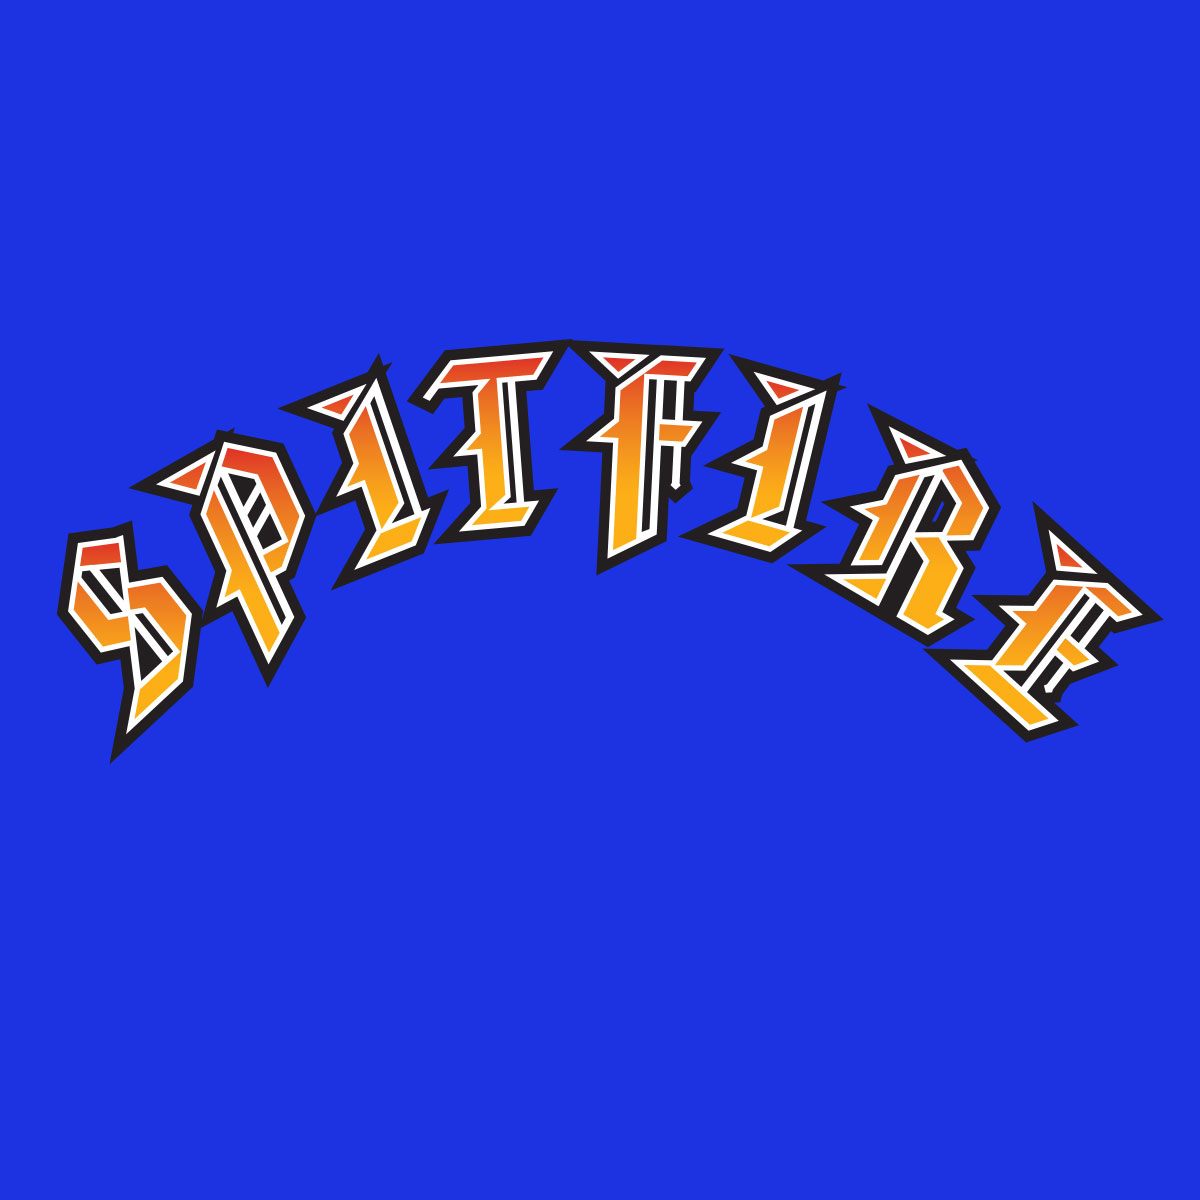 Spitfire Wheels